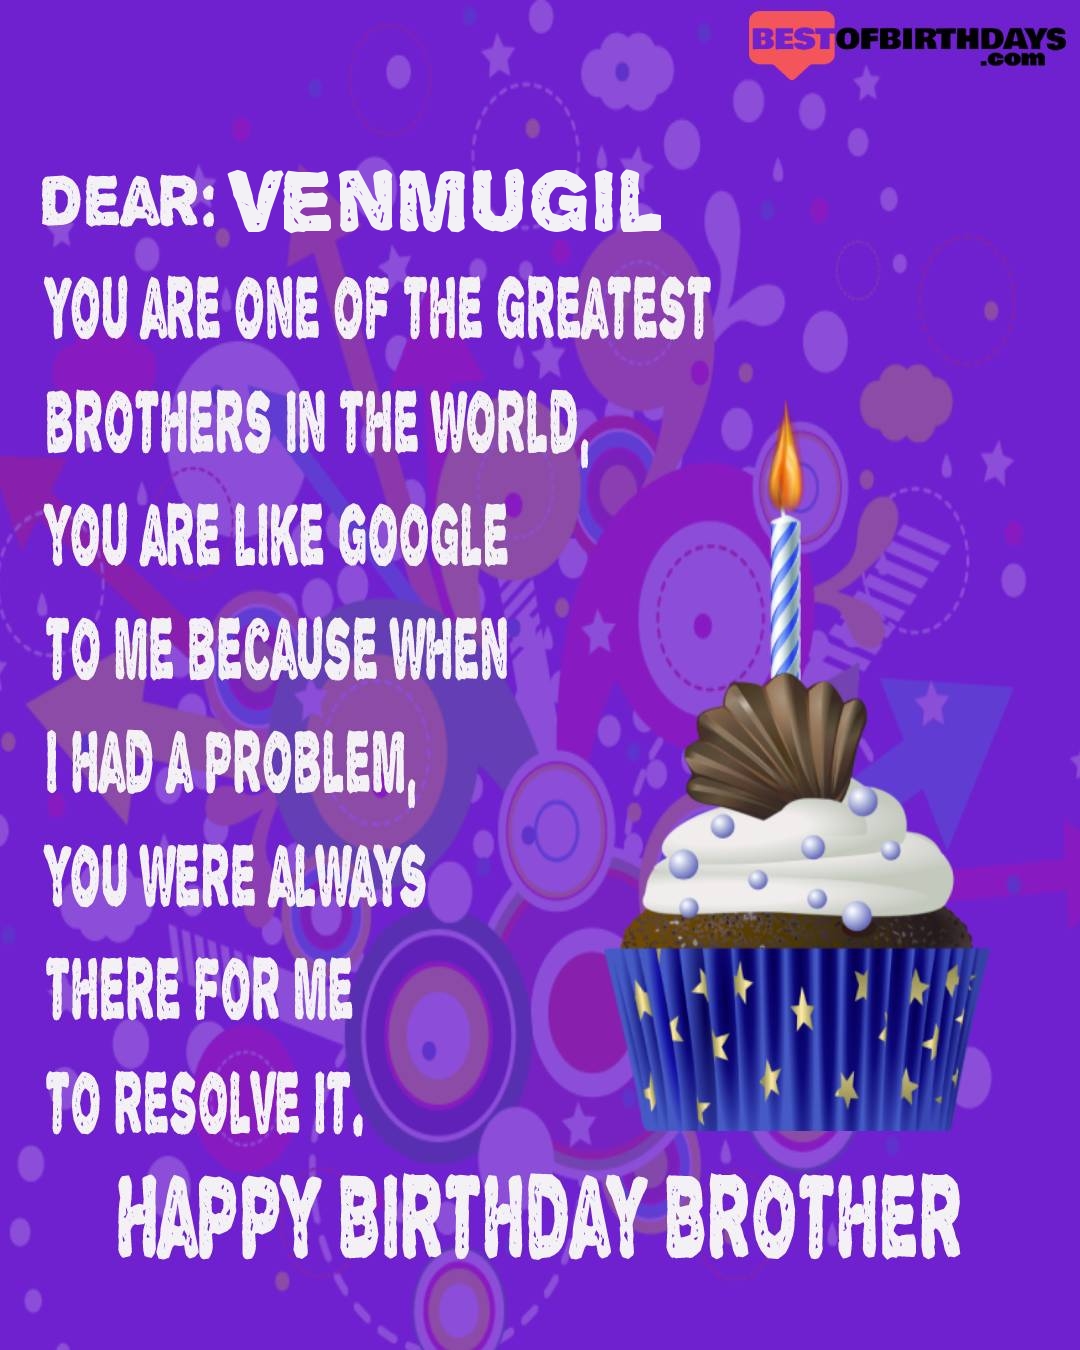 Happy birthday venmugil bhai brother bro